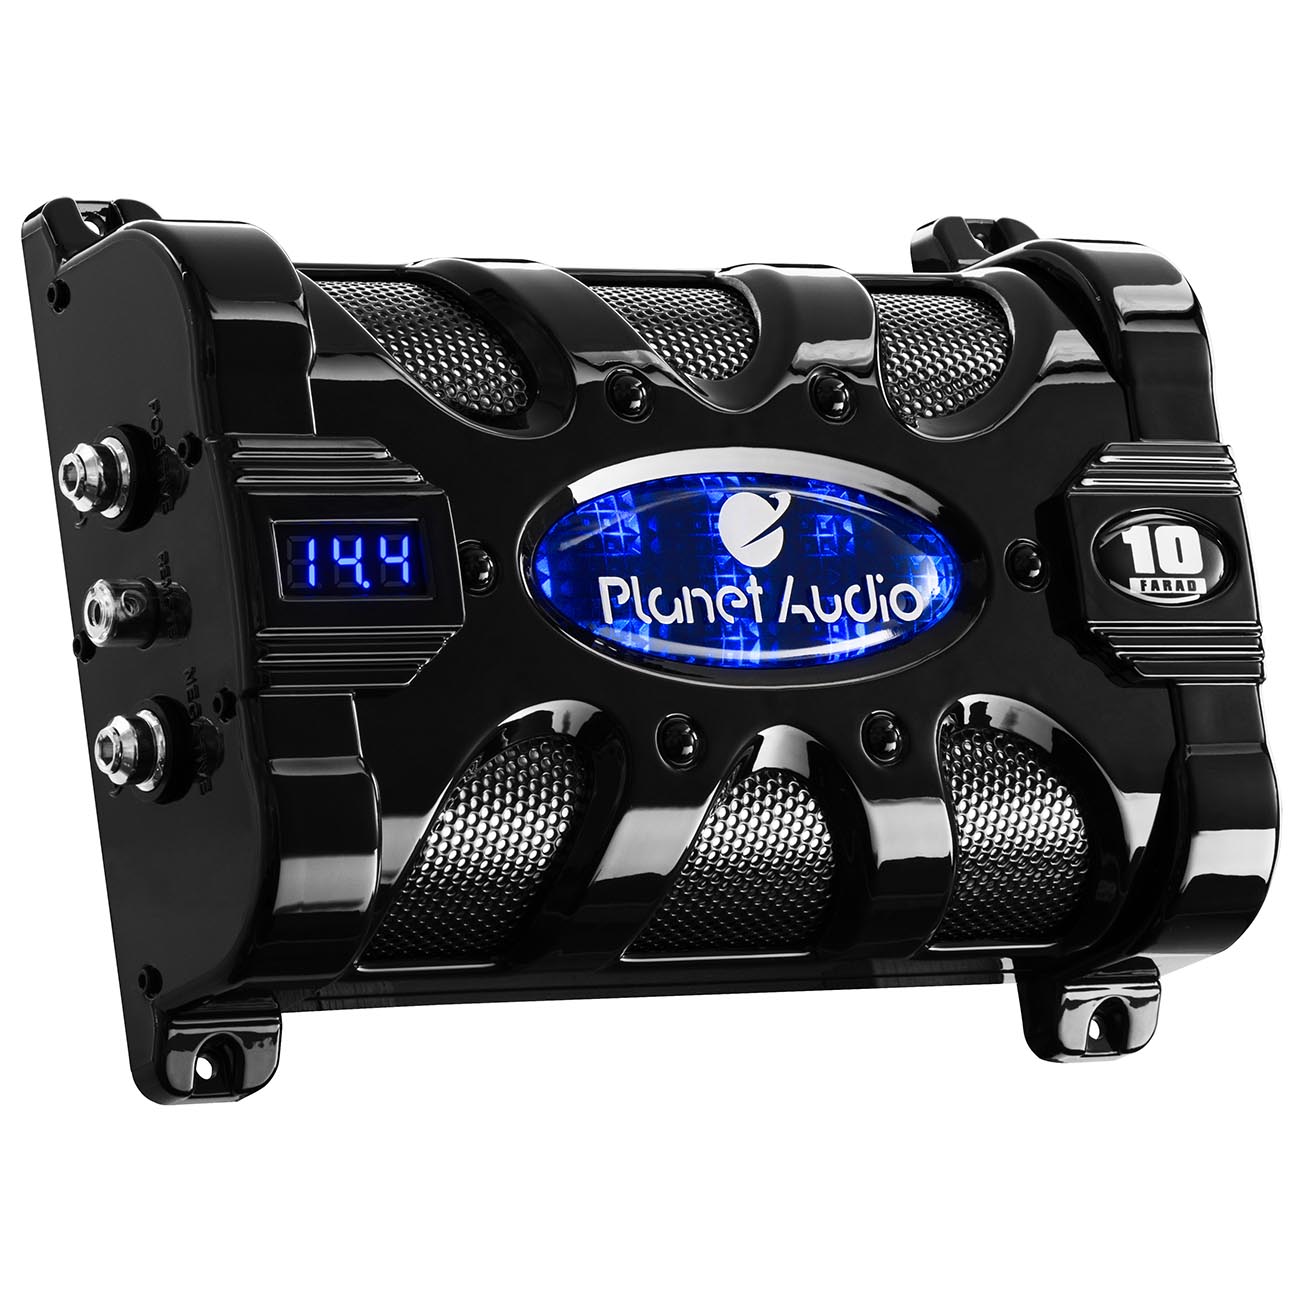 PLANET AUDIO PC10F 10 Farad Capacitor With Digital Voltage Display Blue Illumination